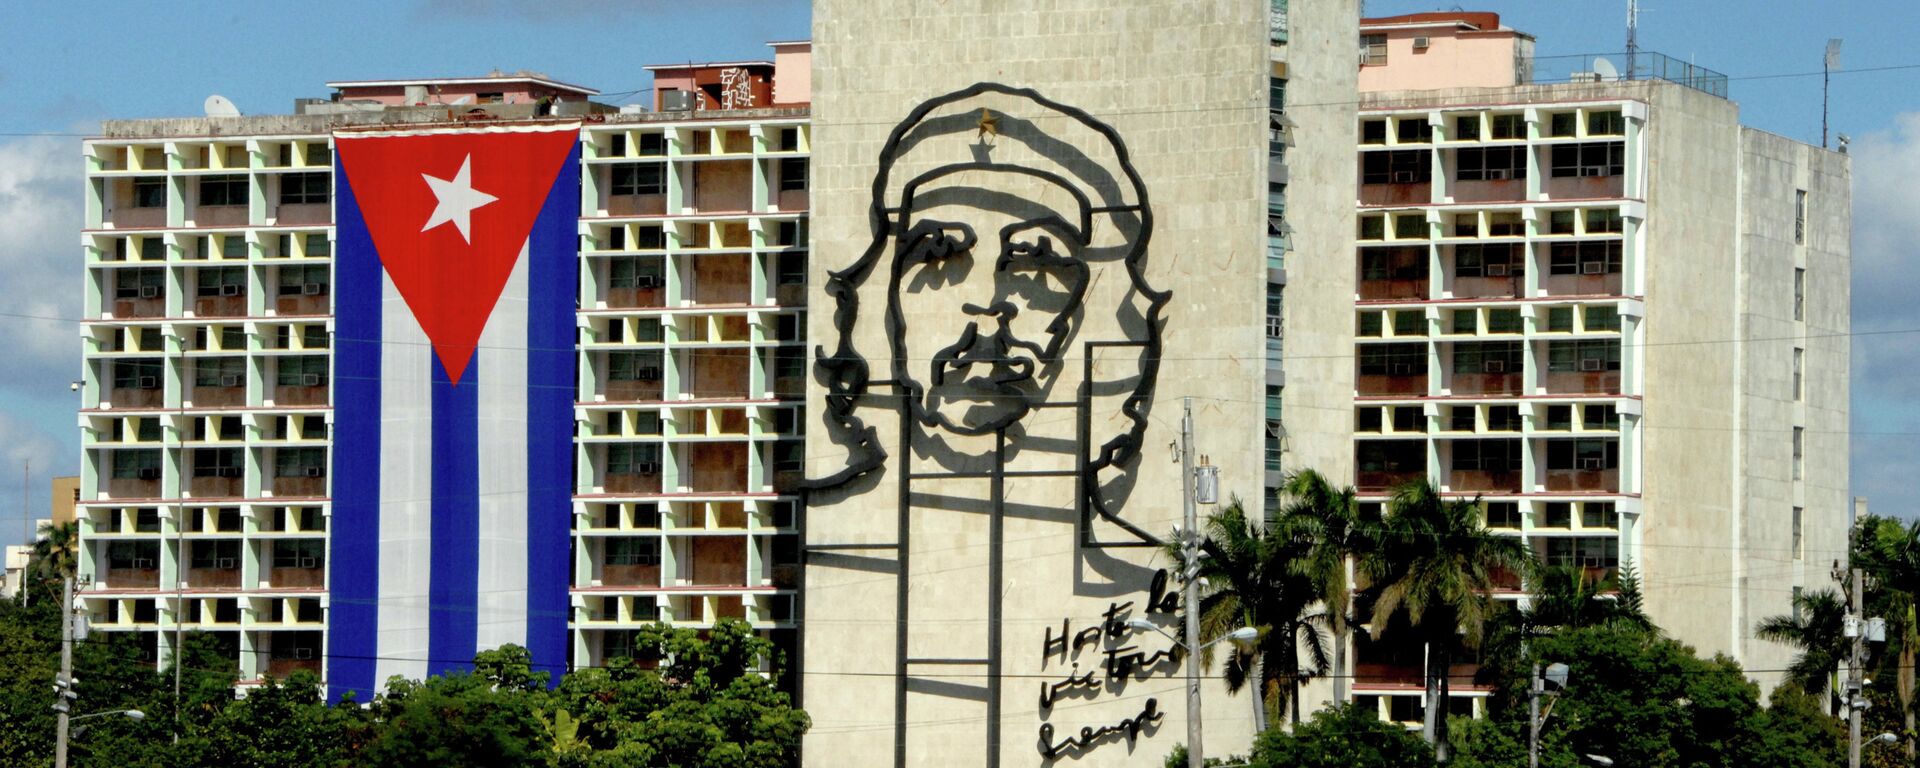 Havana. Cuba - Sputnik International, 1920, 21.05.2017